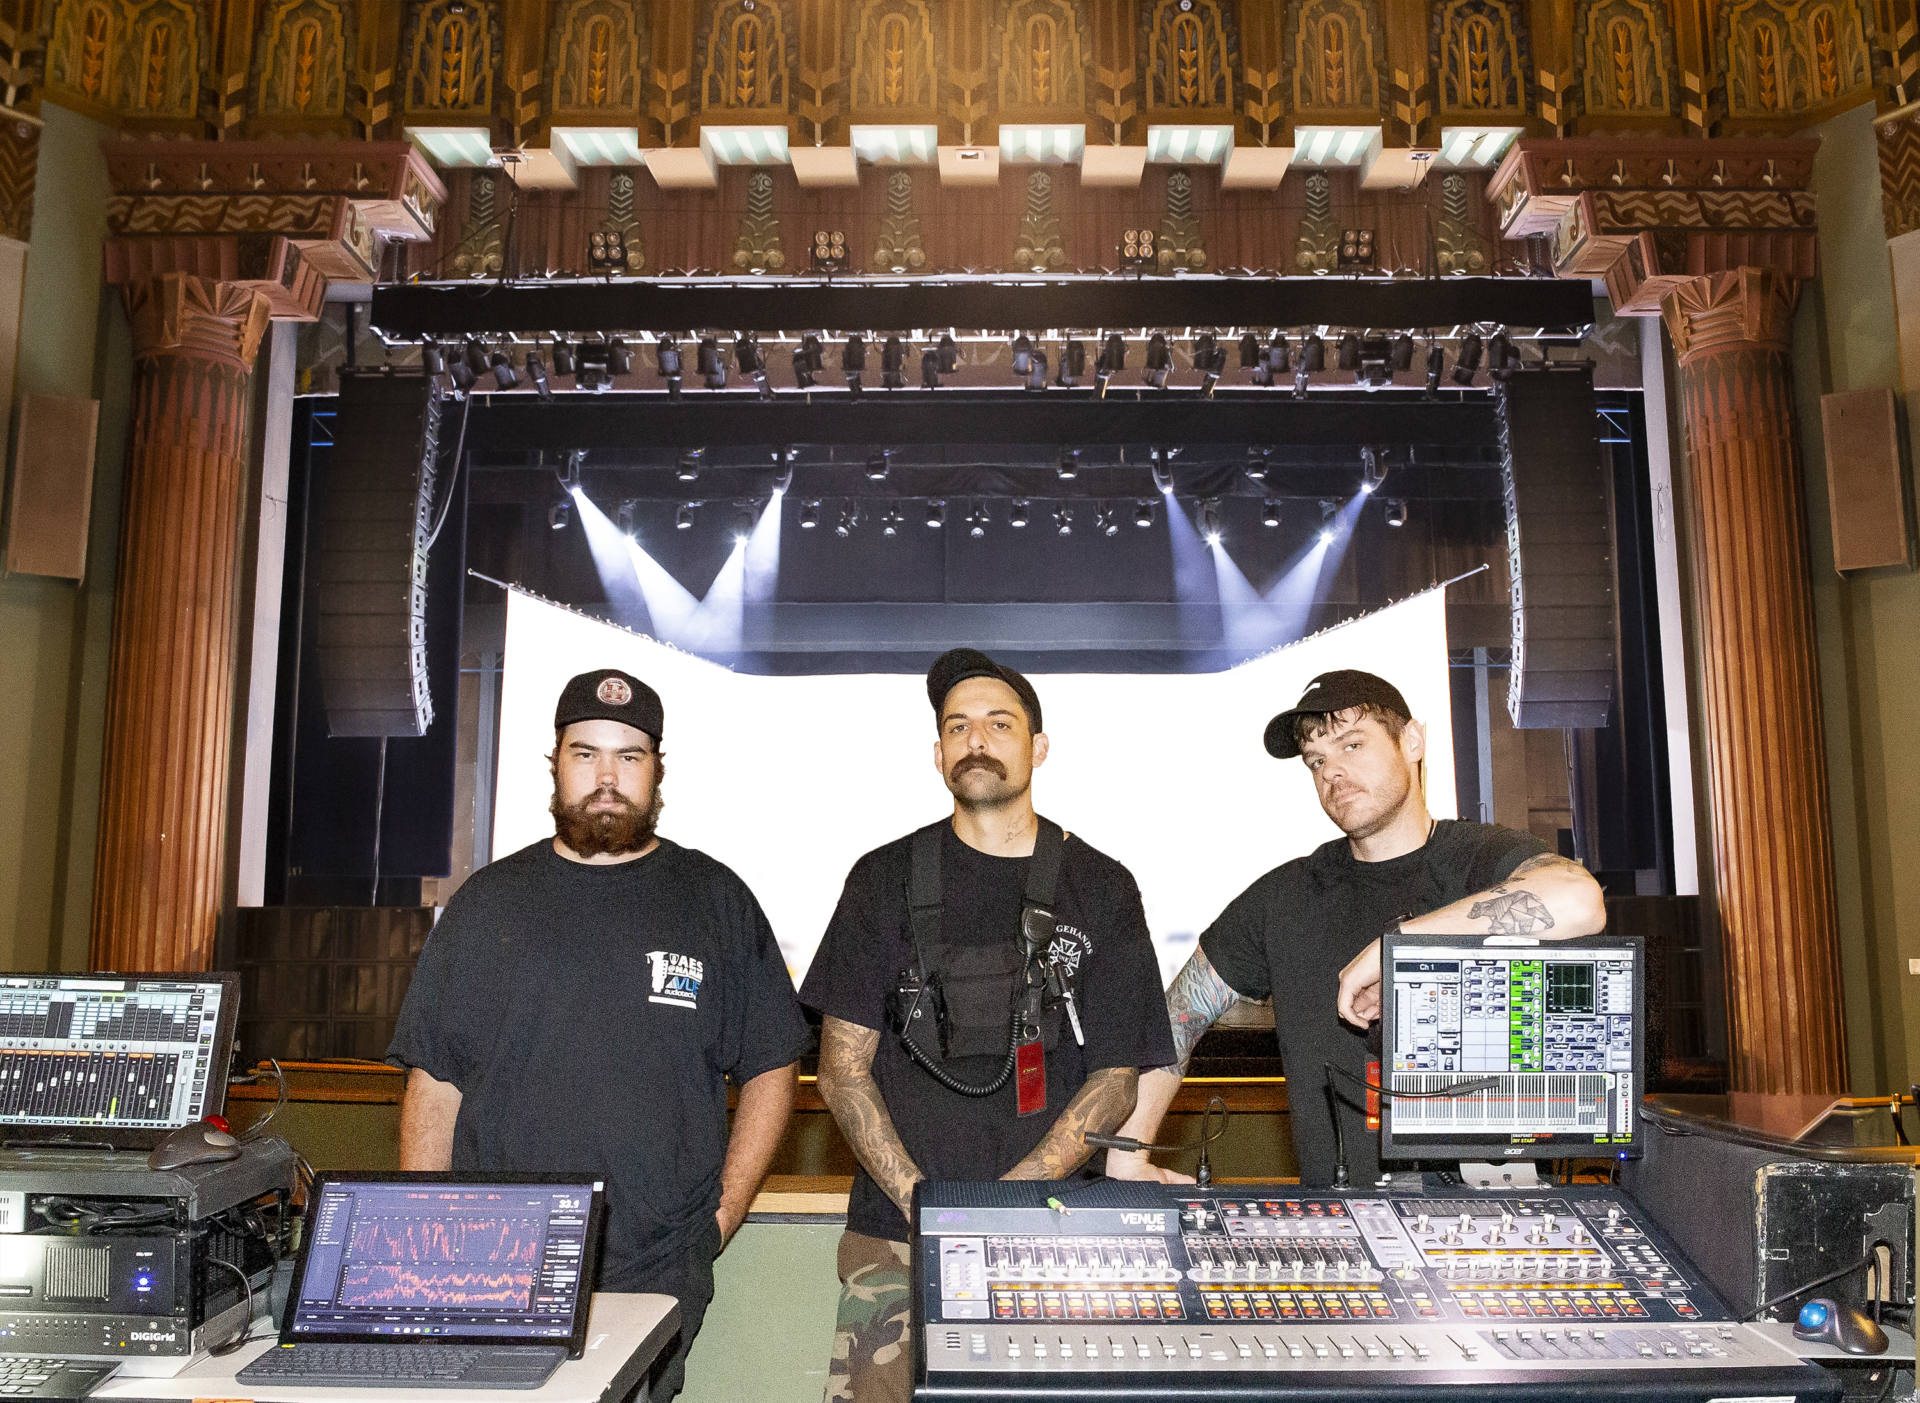 Three men stand behind audio equipment at a historic venue